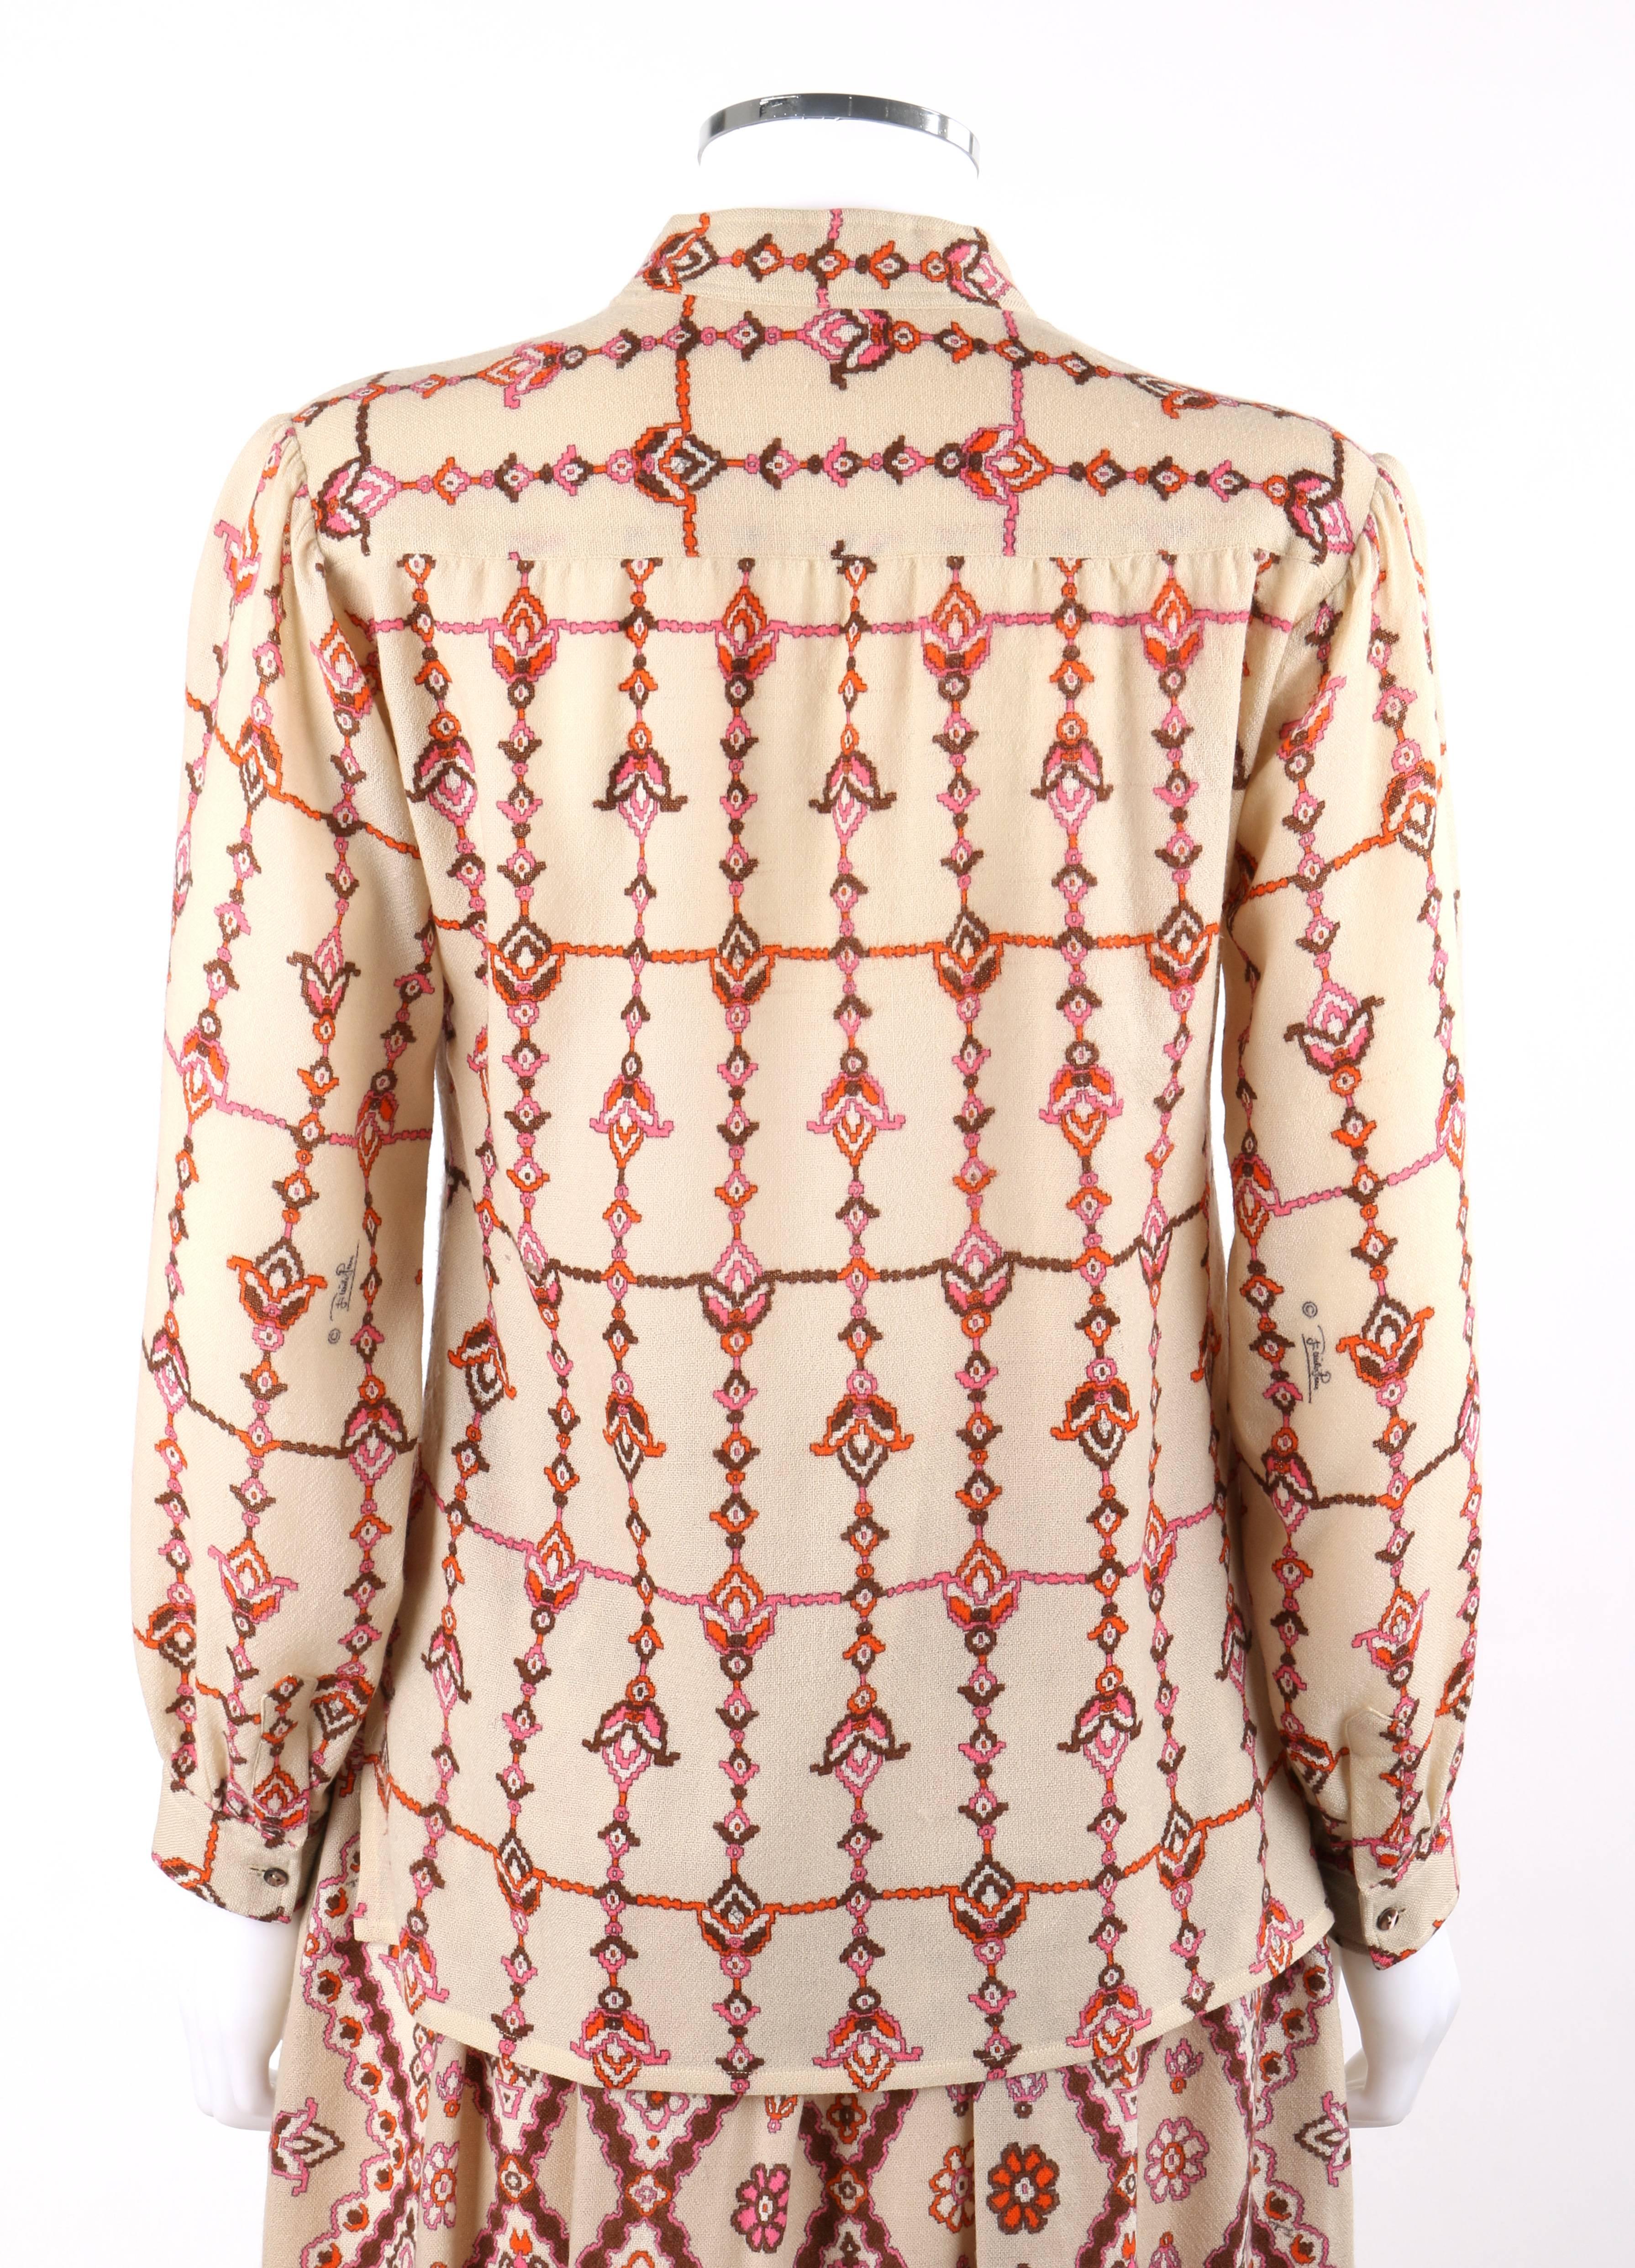 Emilio Pucci Signature Print Shirt Blouse Gathered Skirt Dress Set, circa 1950s For Sale 1